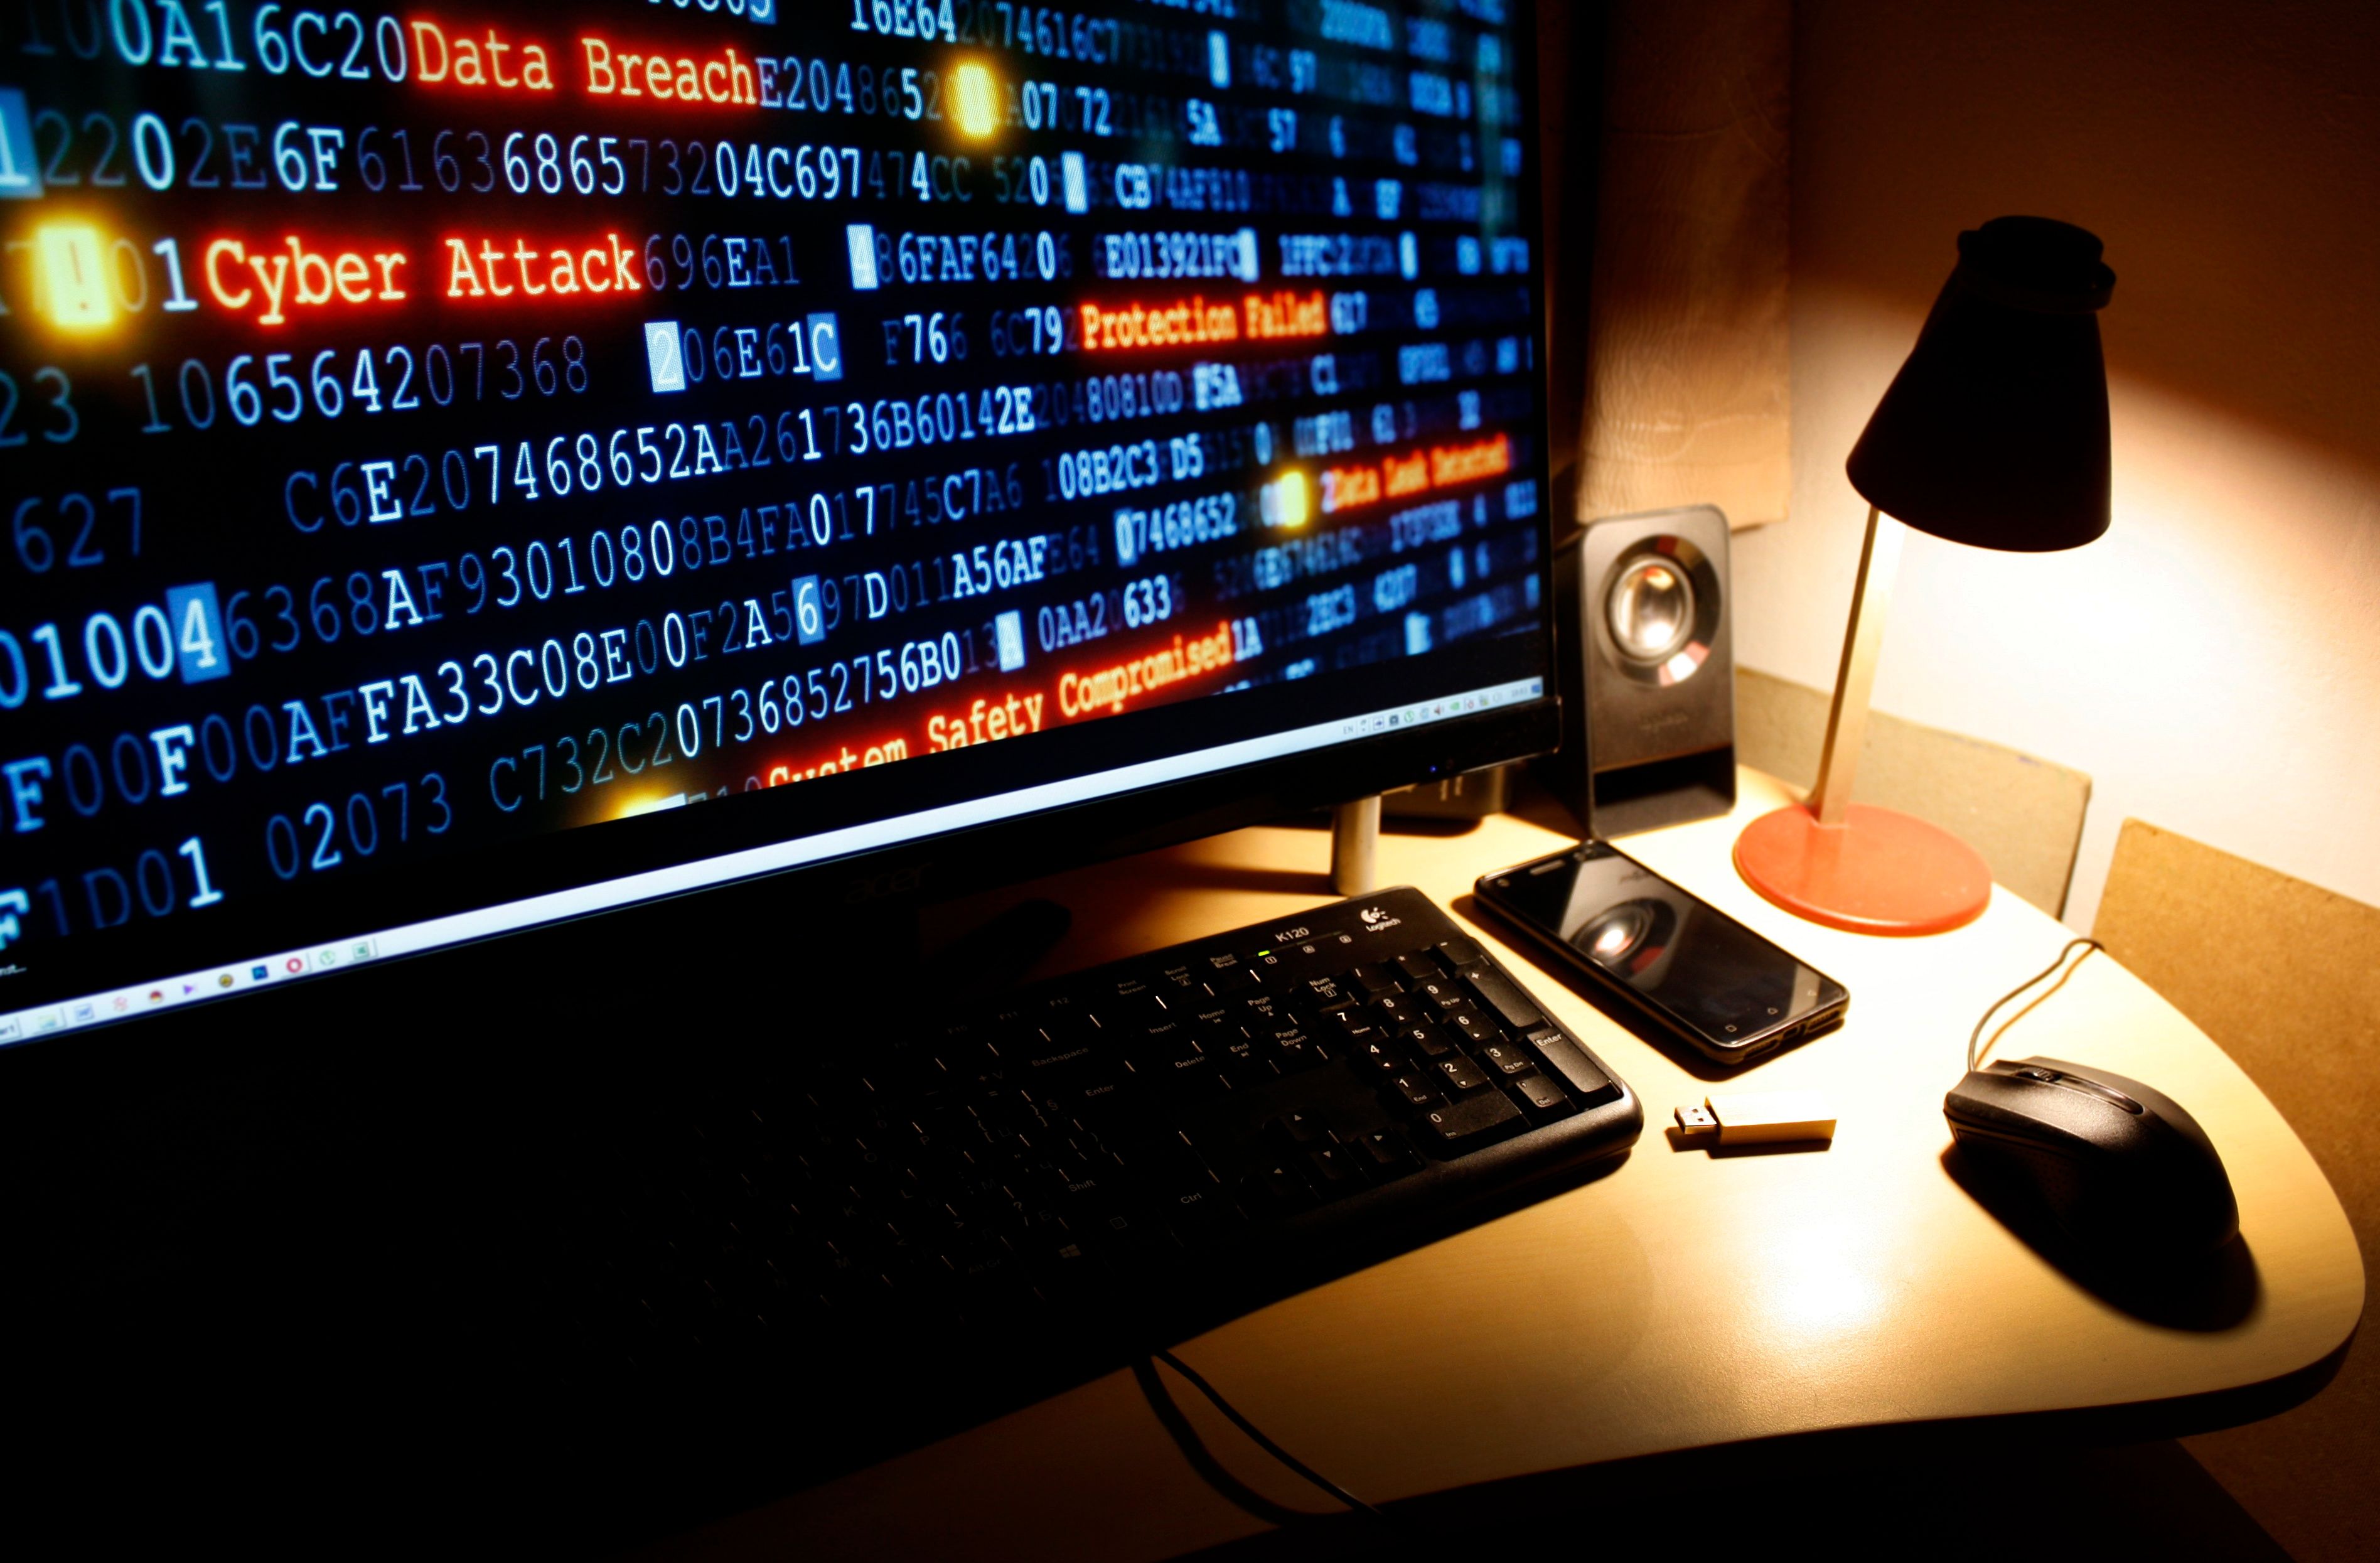 cyber-crime-cyber-attack-hacking-computer-deskt-2021-09-02-00-54-55-utc.jpg